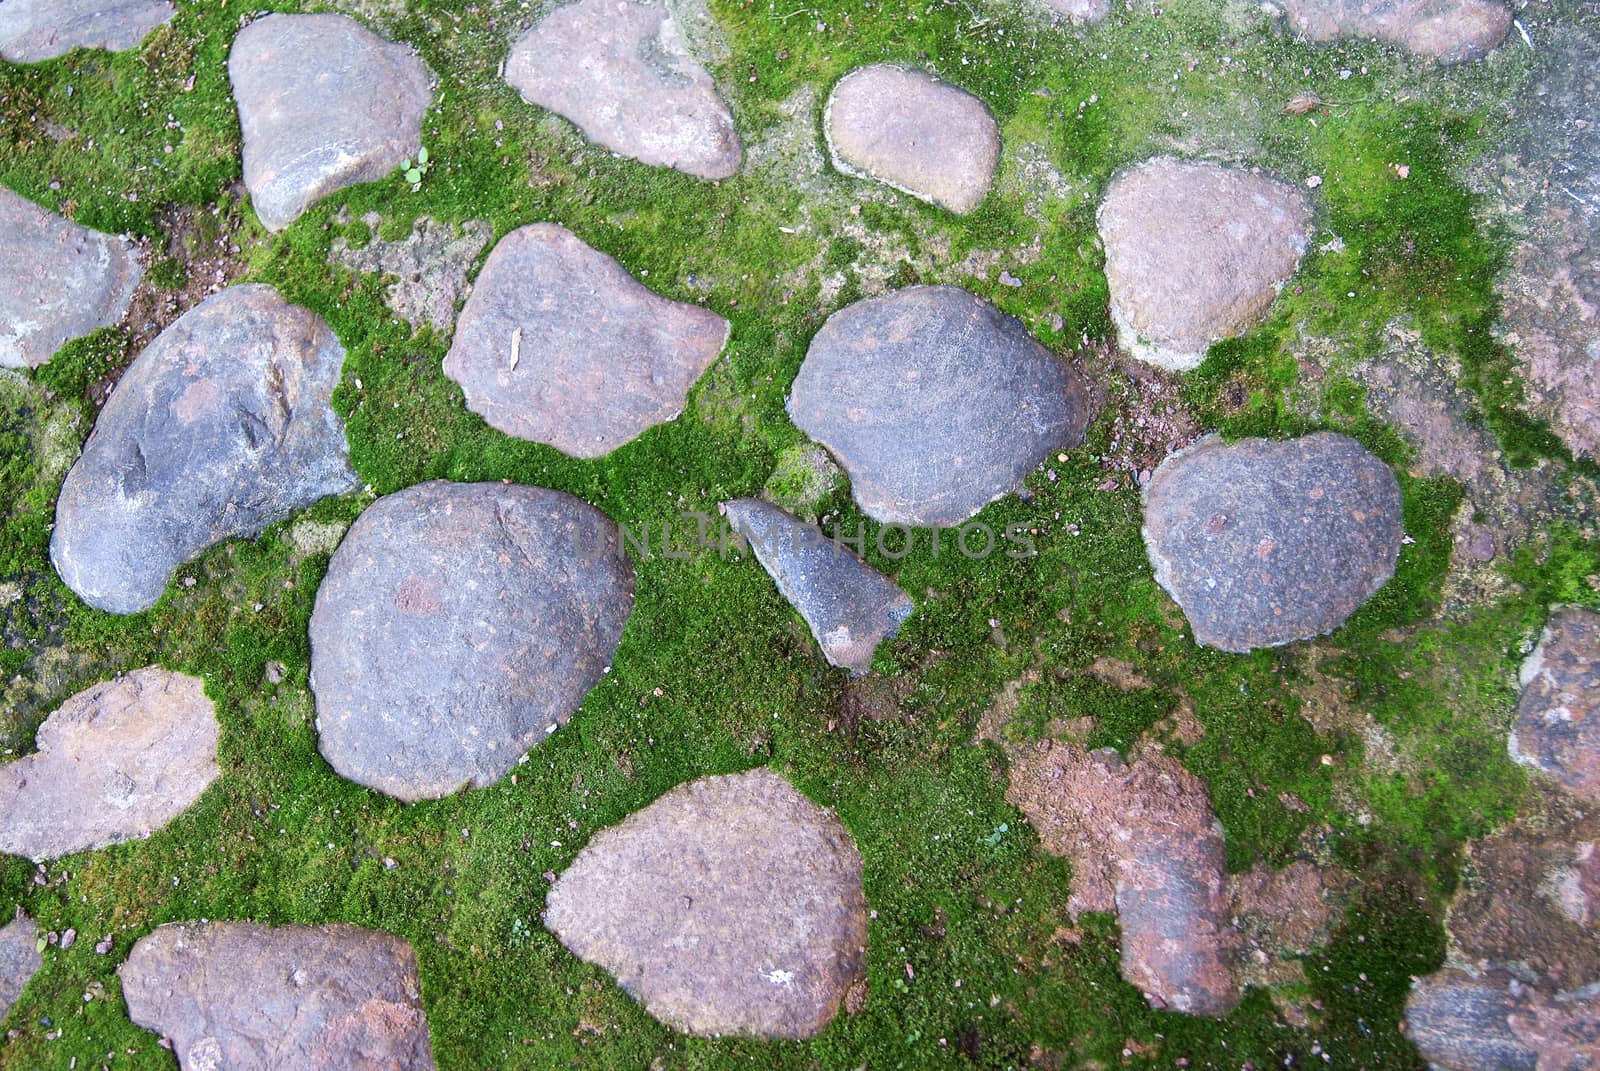 Cobblestone in Moss Background by 4dcrew